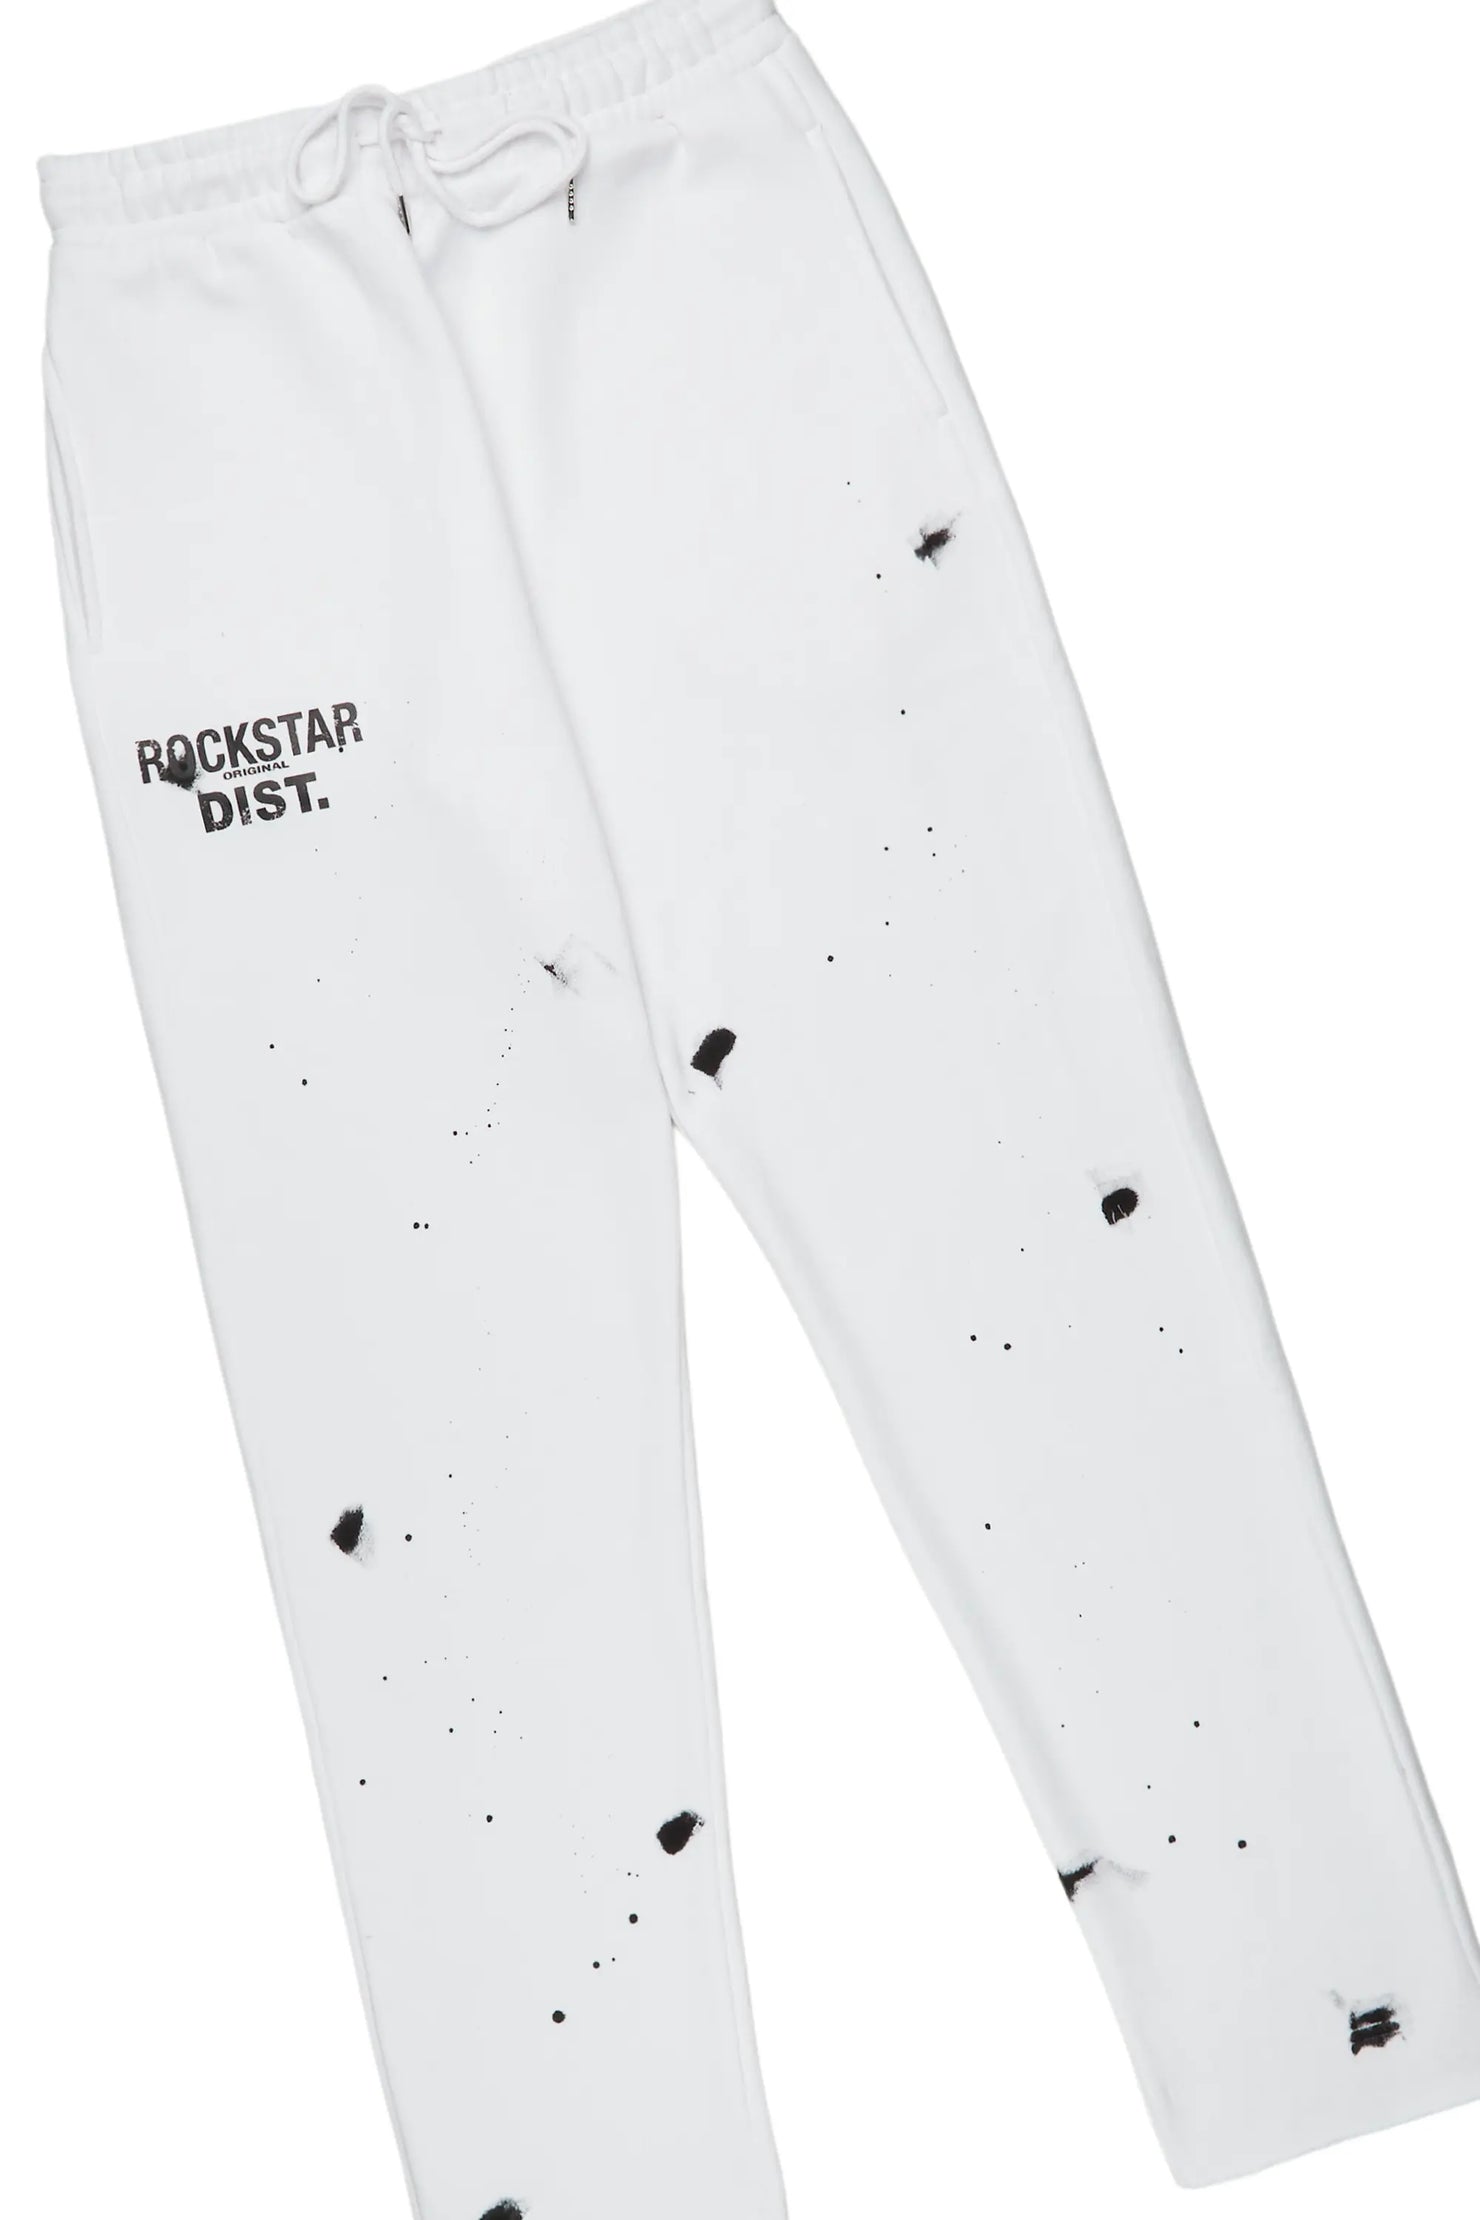 Raffer Grey/White Hoodie/Super Stacked Flare Pant Set– Rockstar Original